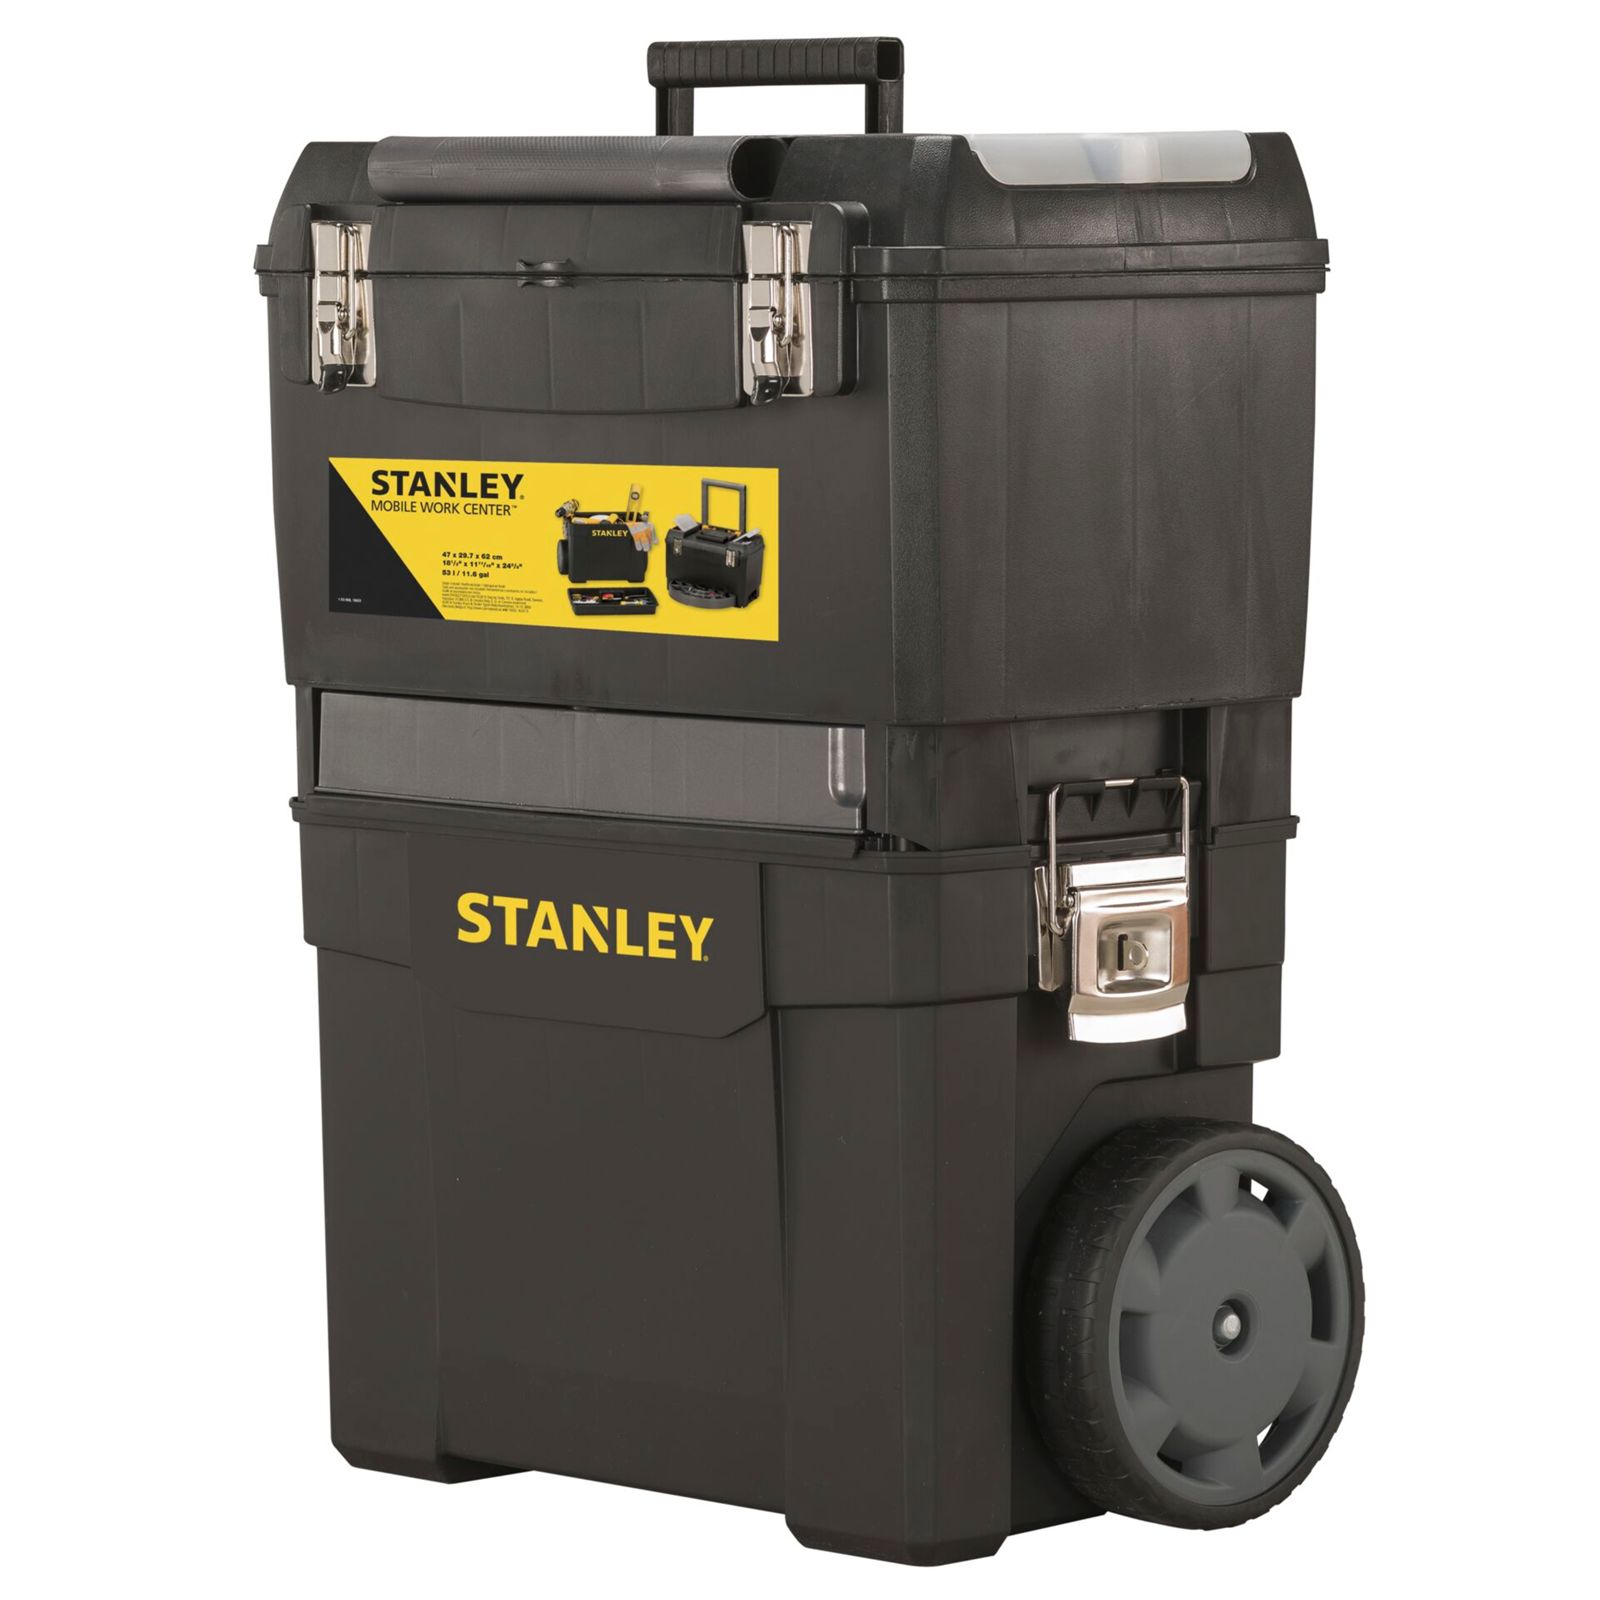 Stanley officina portatile trolley porta utensili